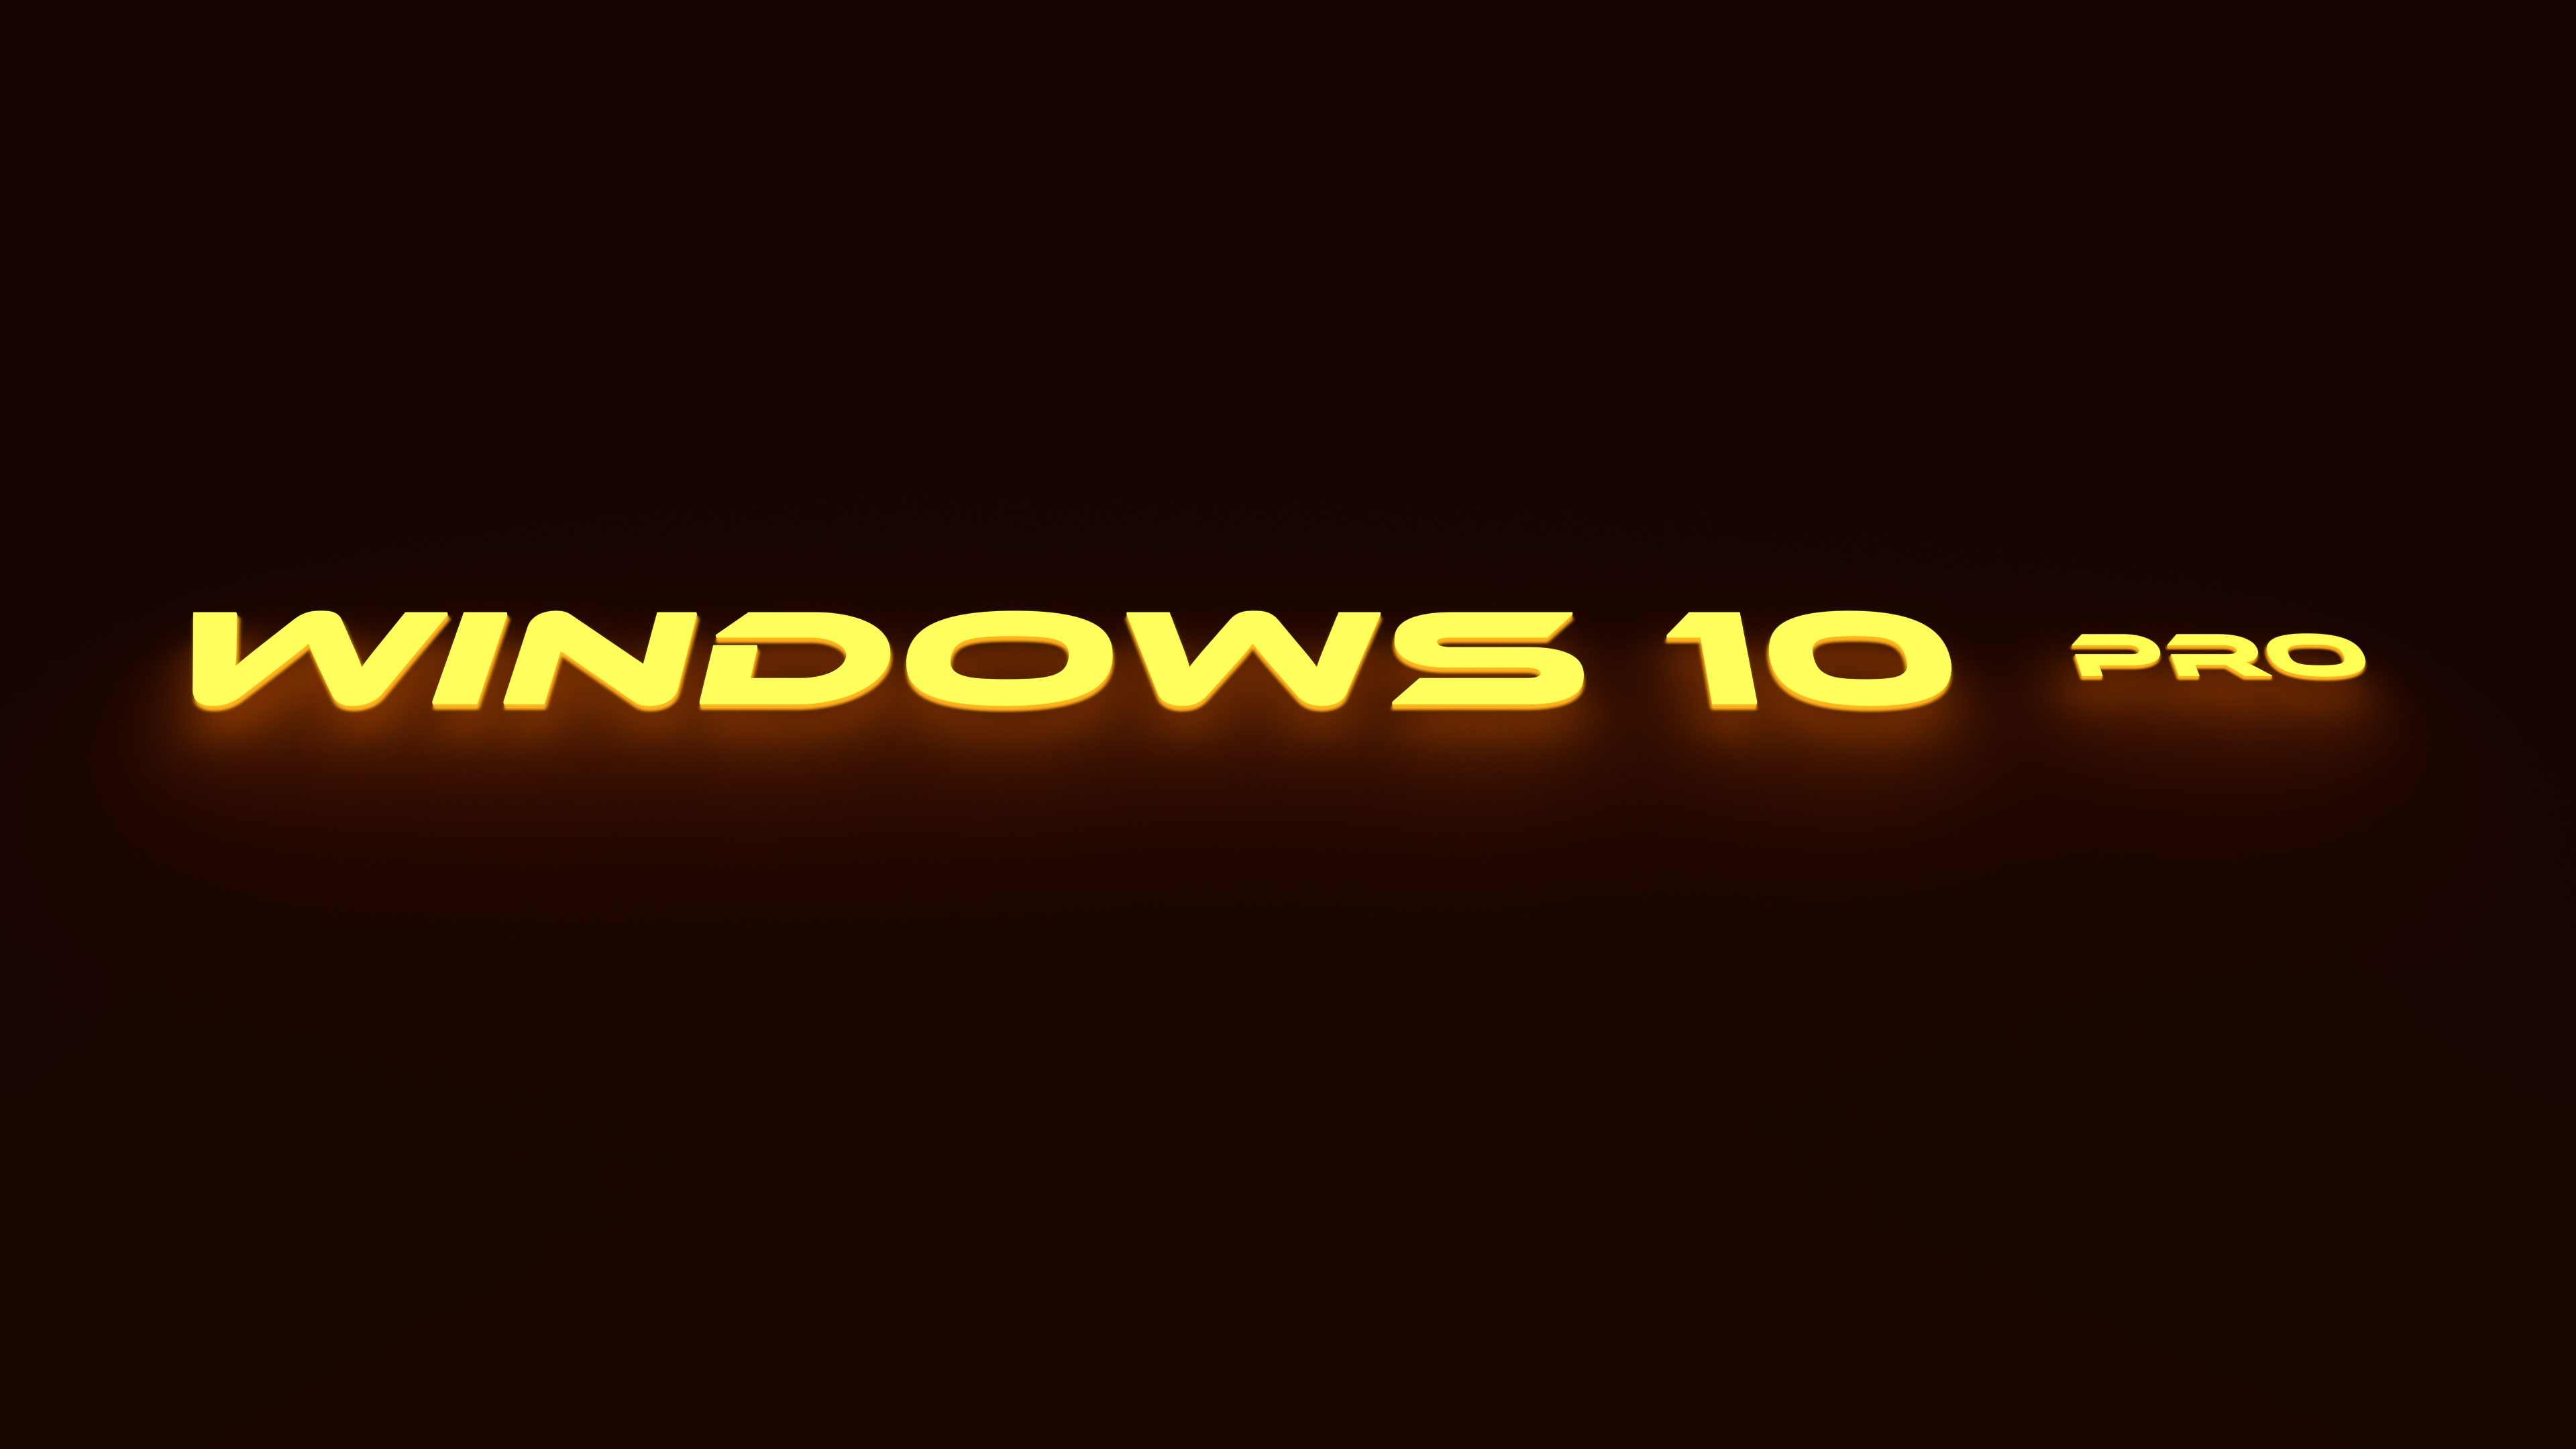 Windows 10 Pro Wallpaper 1366X768 - Original Annimated Windows 10 Logo